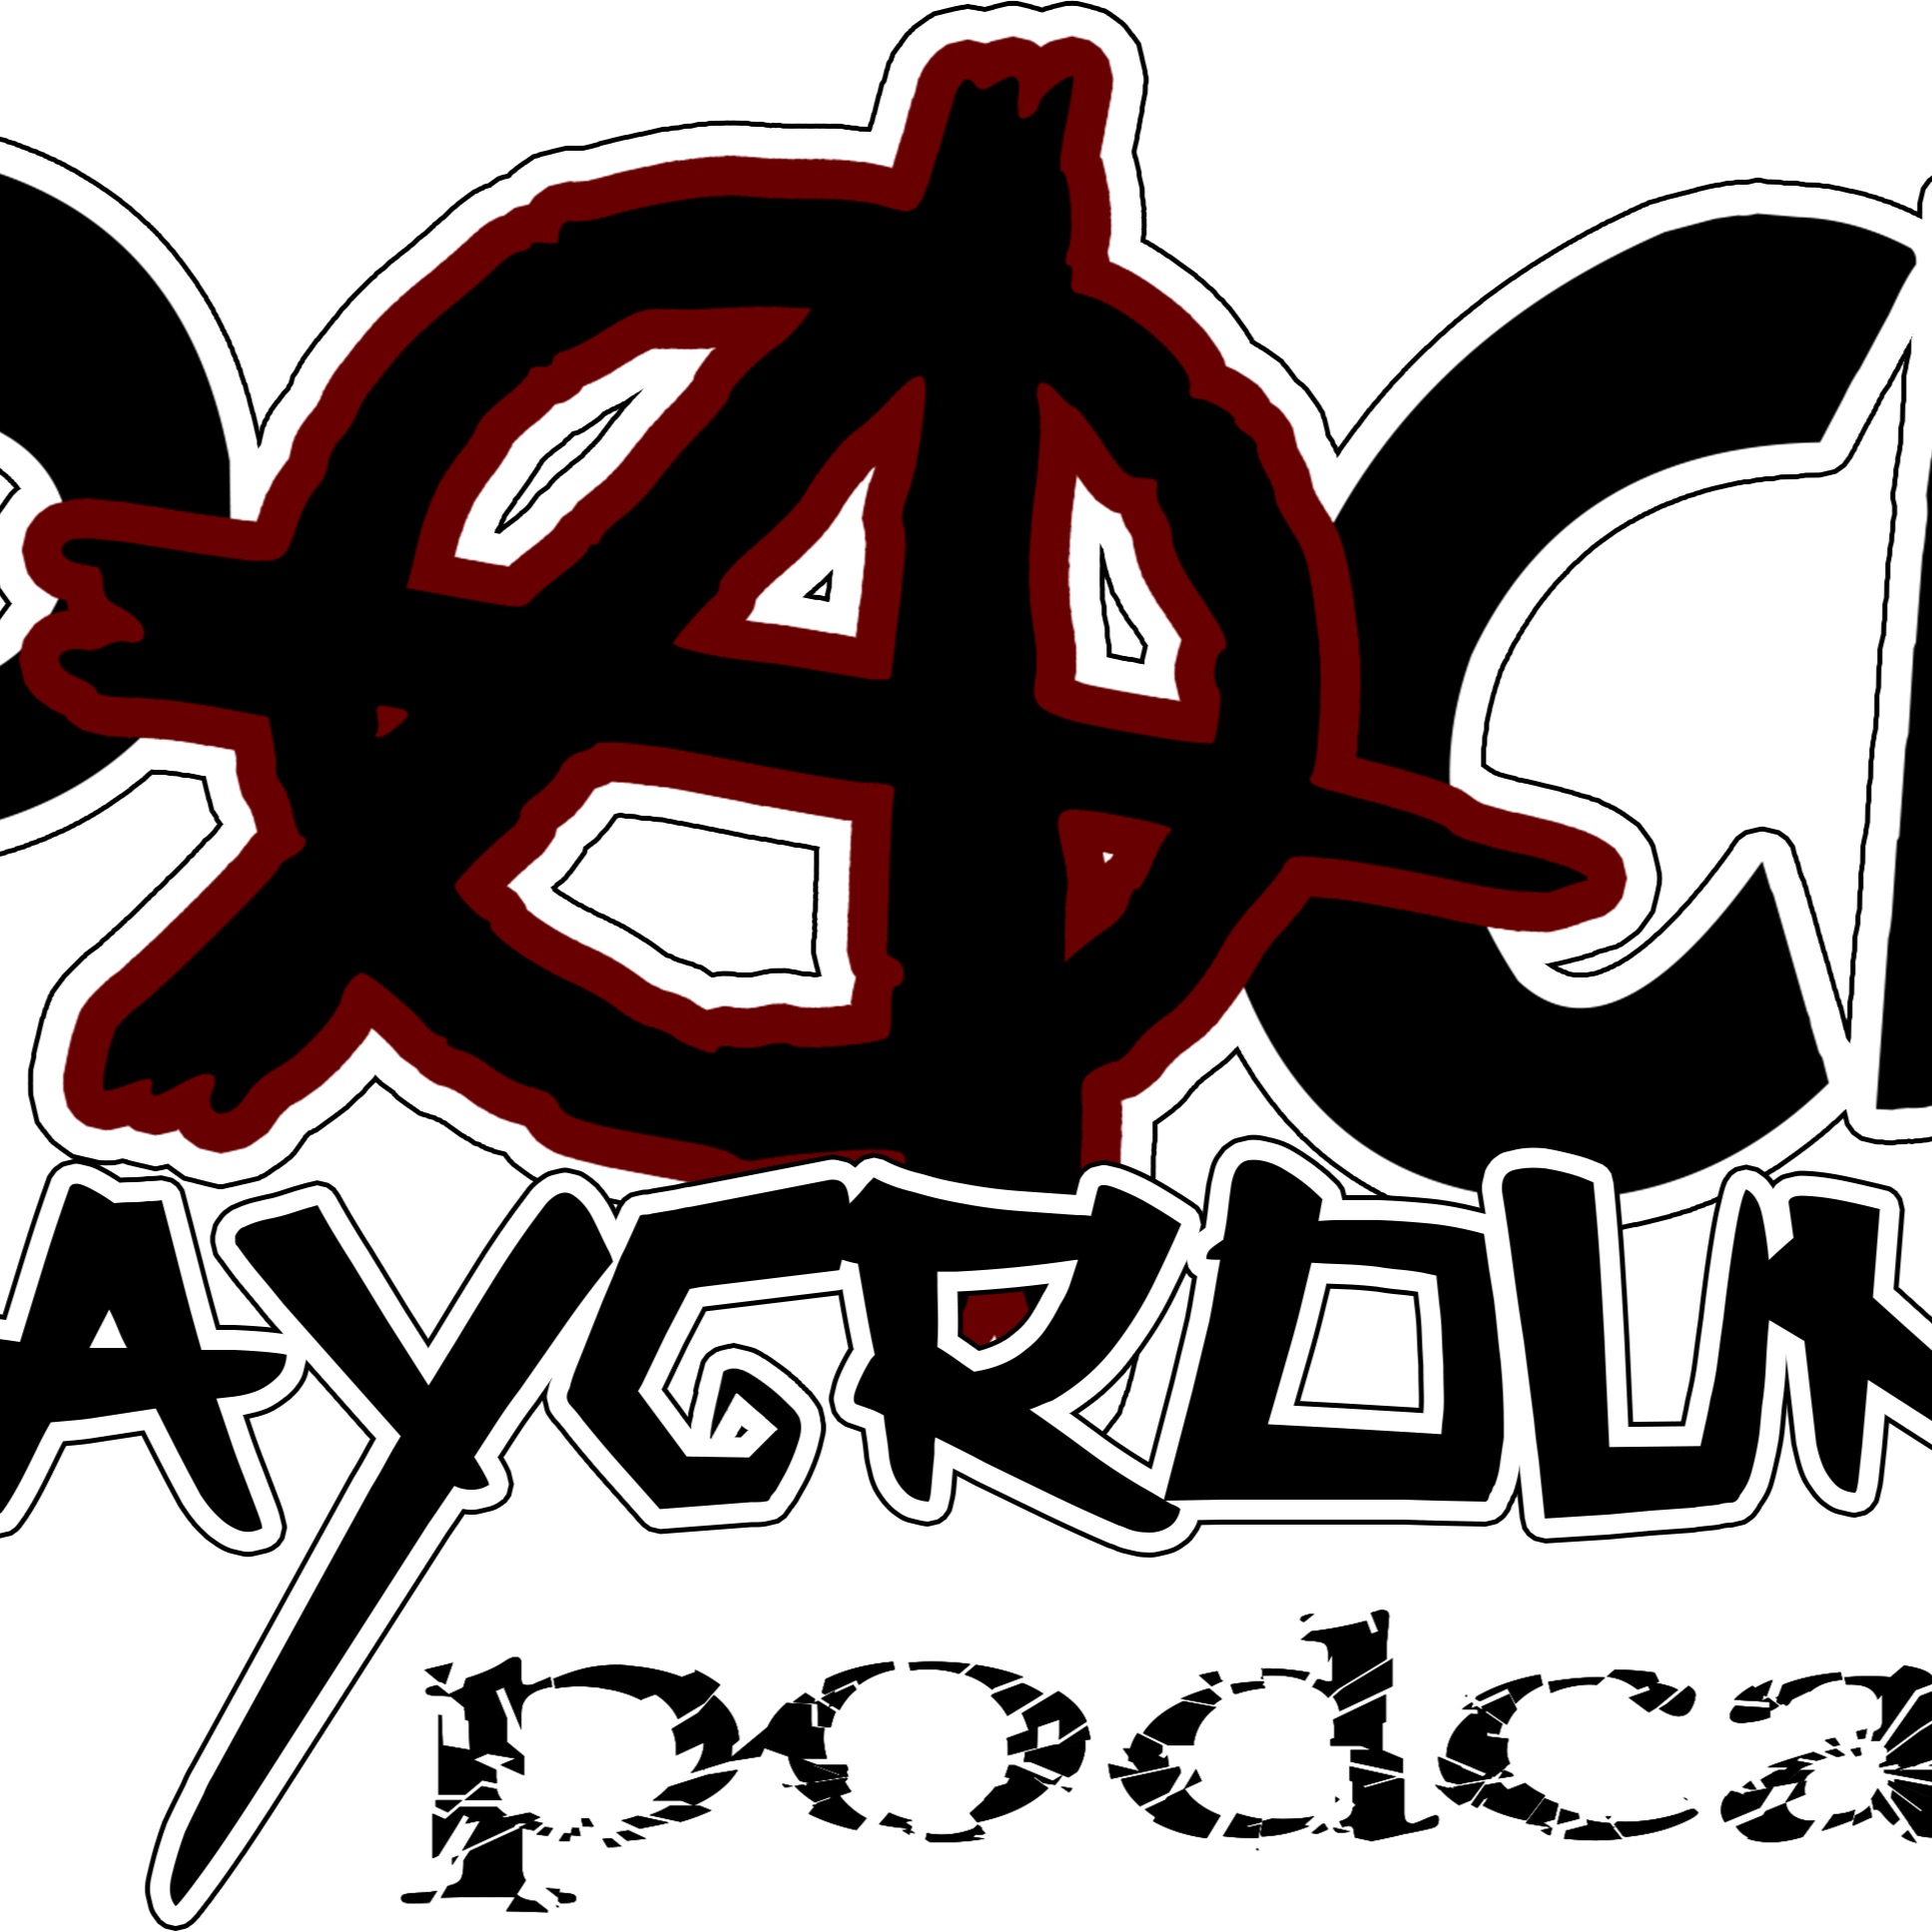 Playground podcast